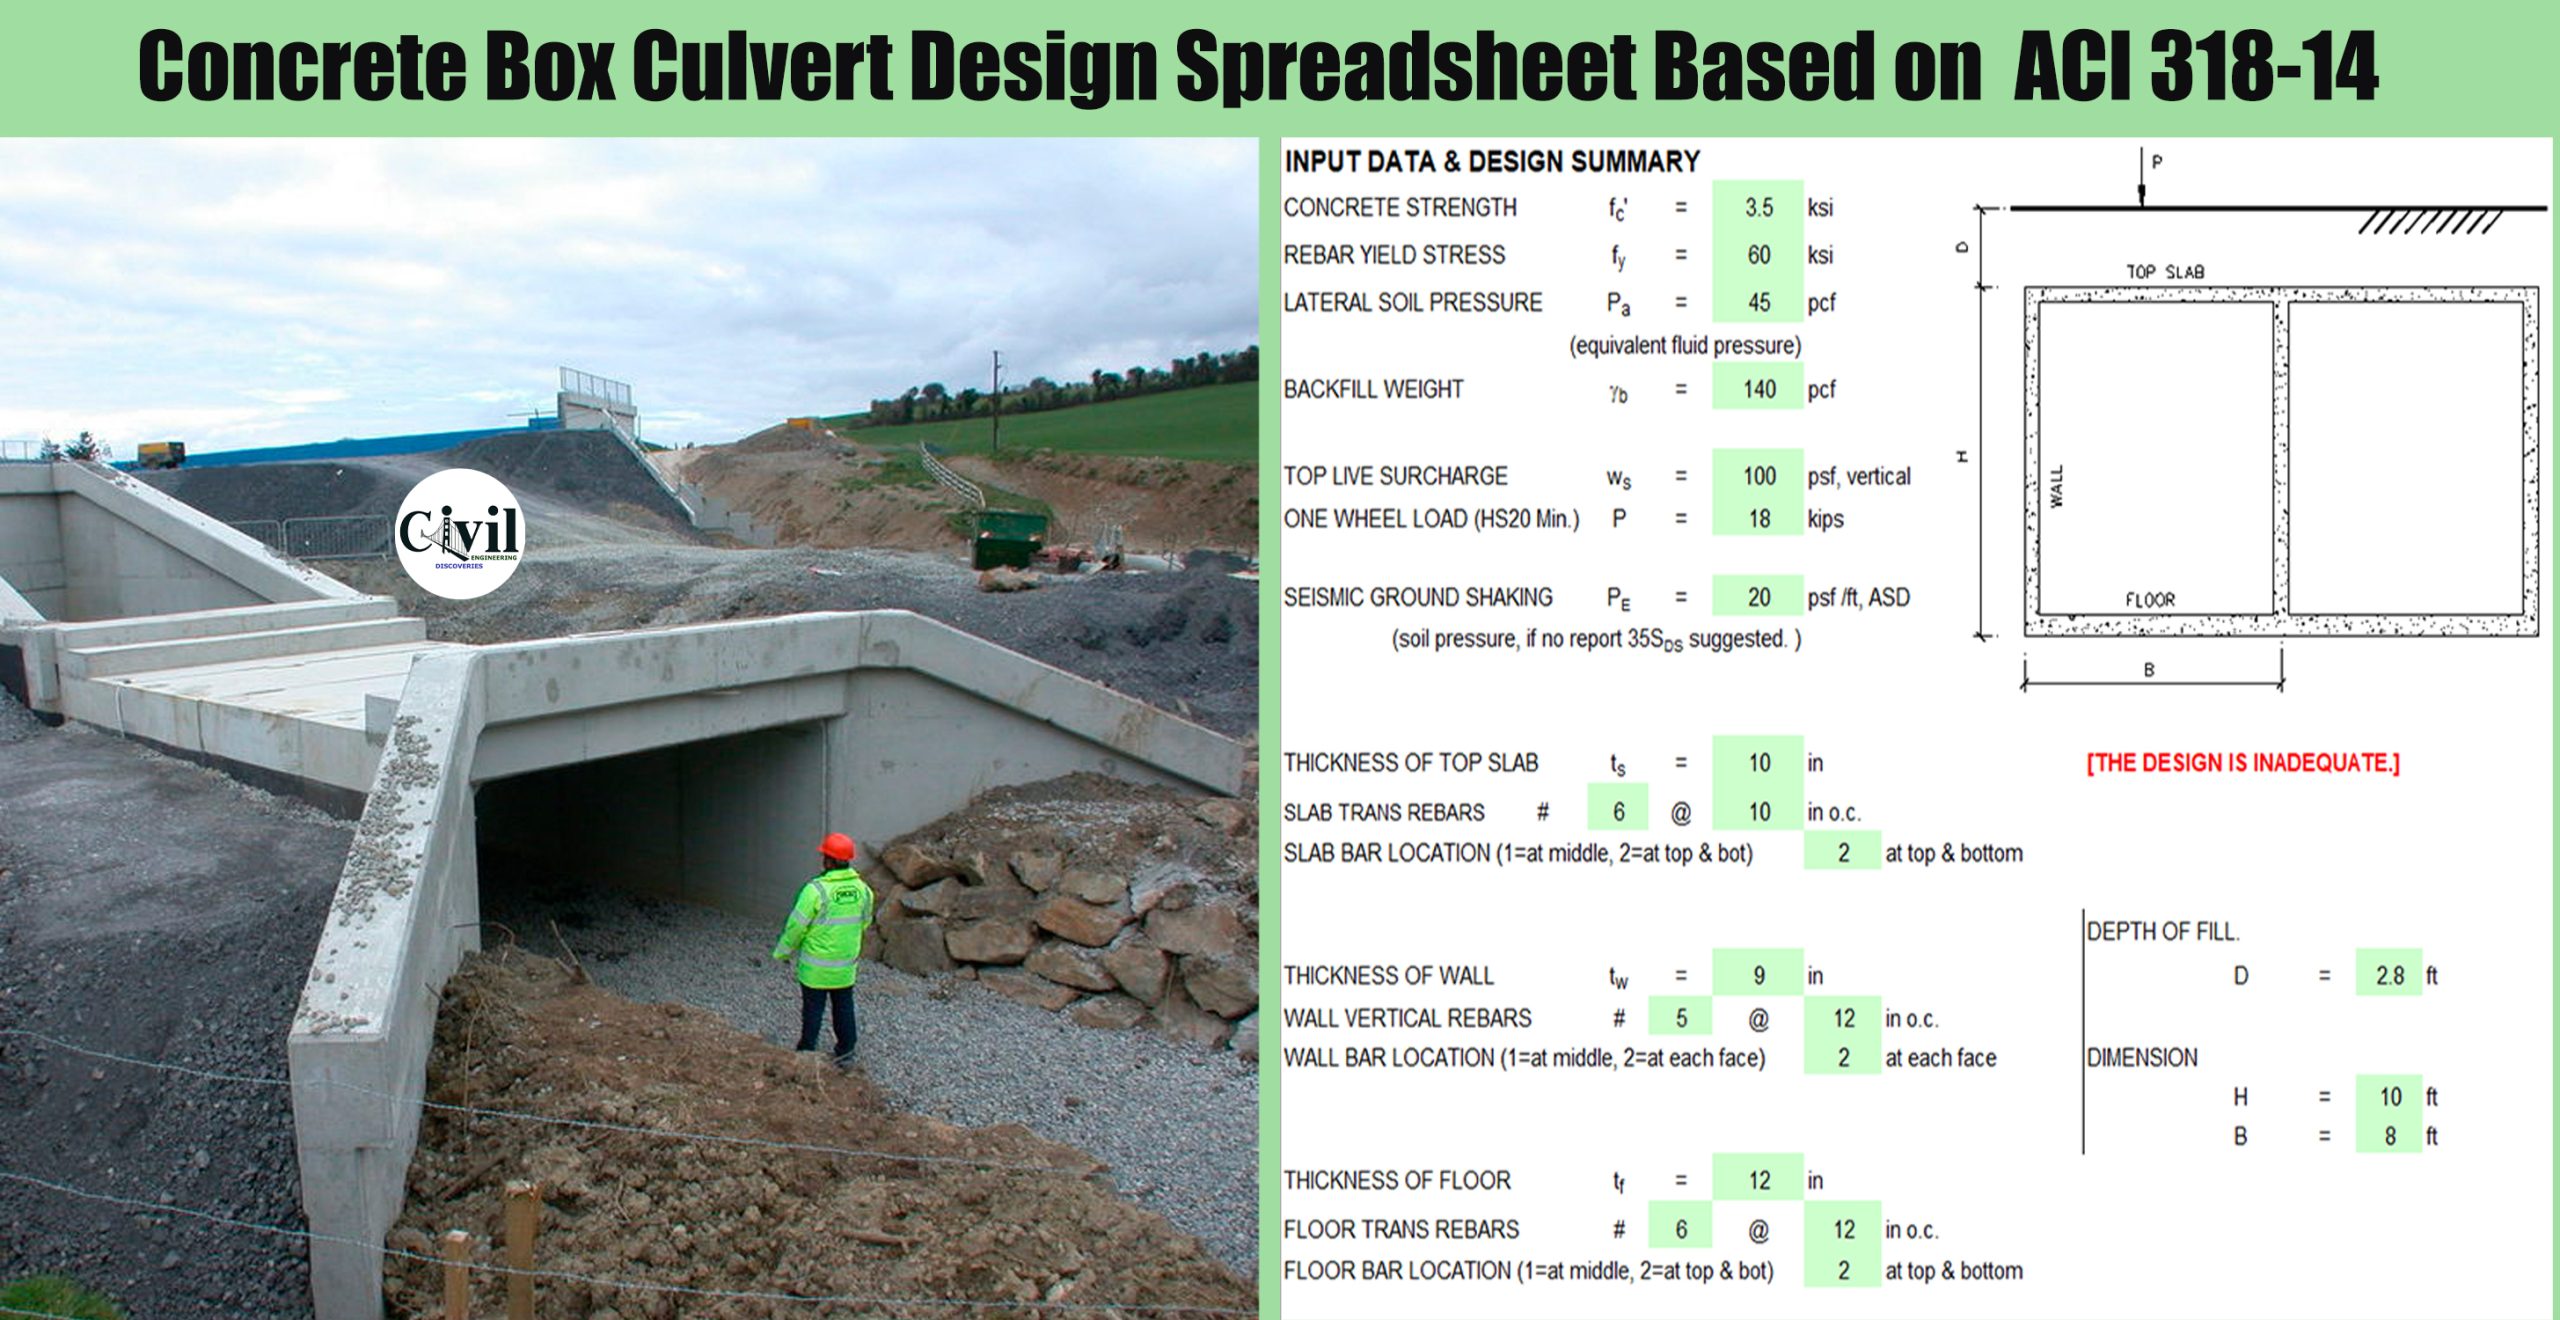 Concrete Box Culvert Design Spreadsheet Based On ACI 318-14